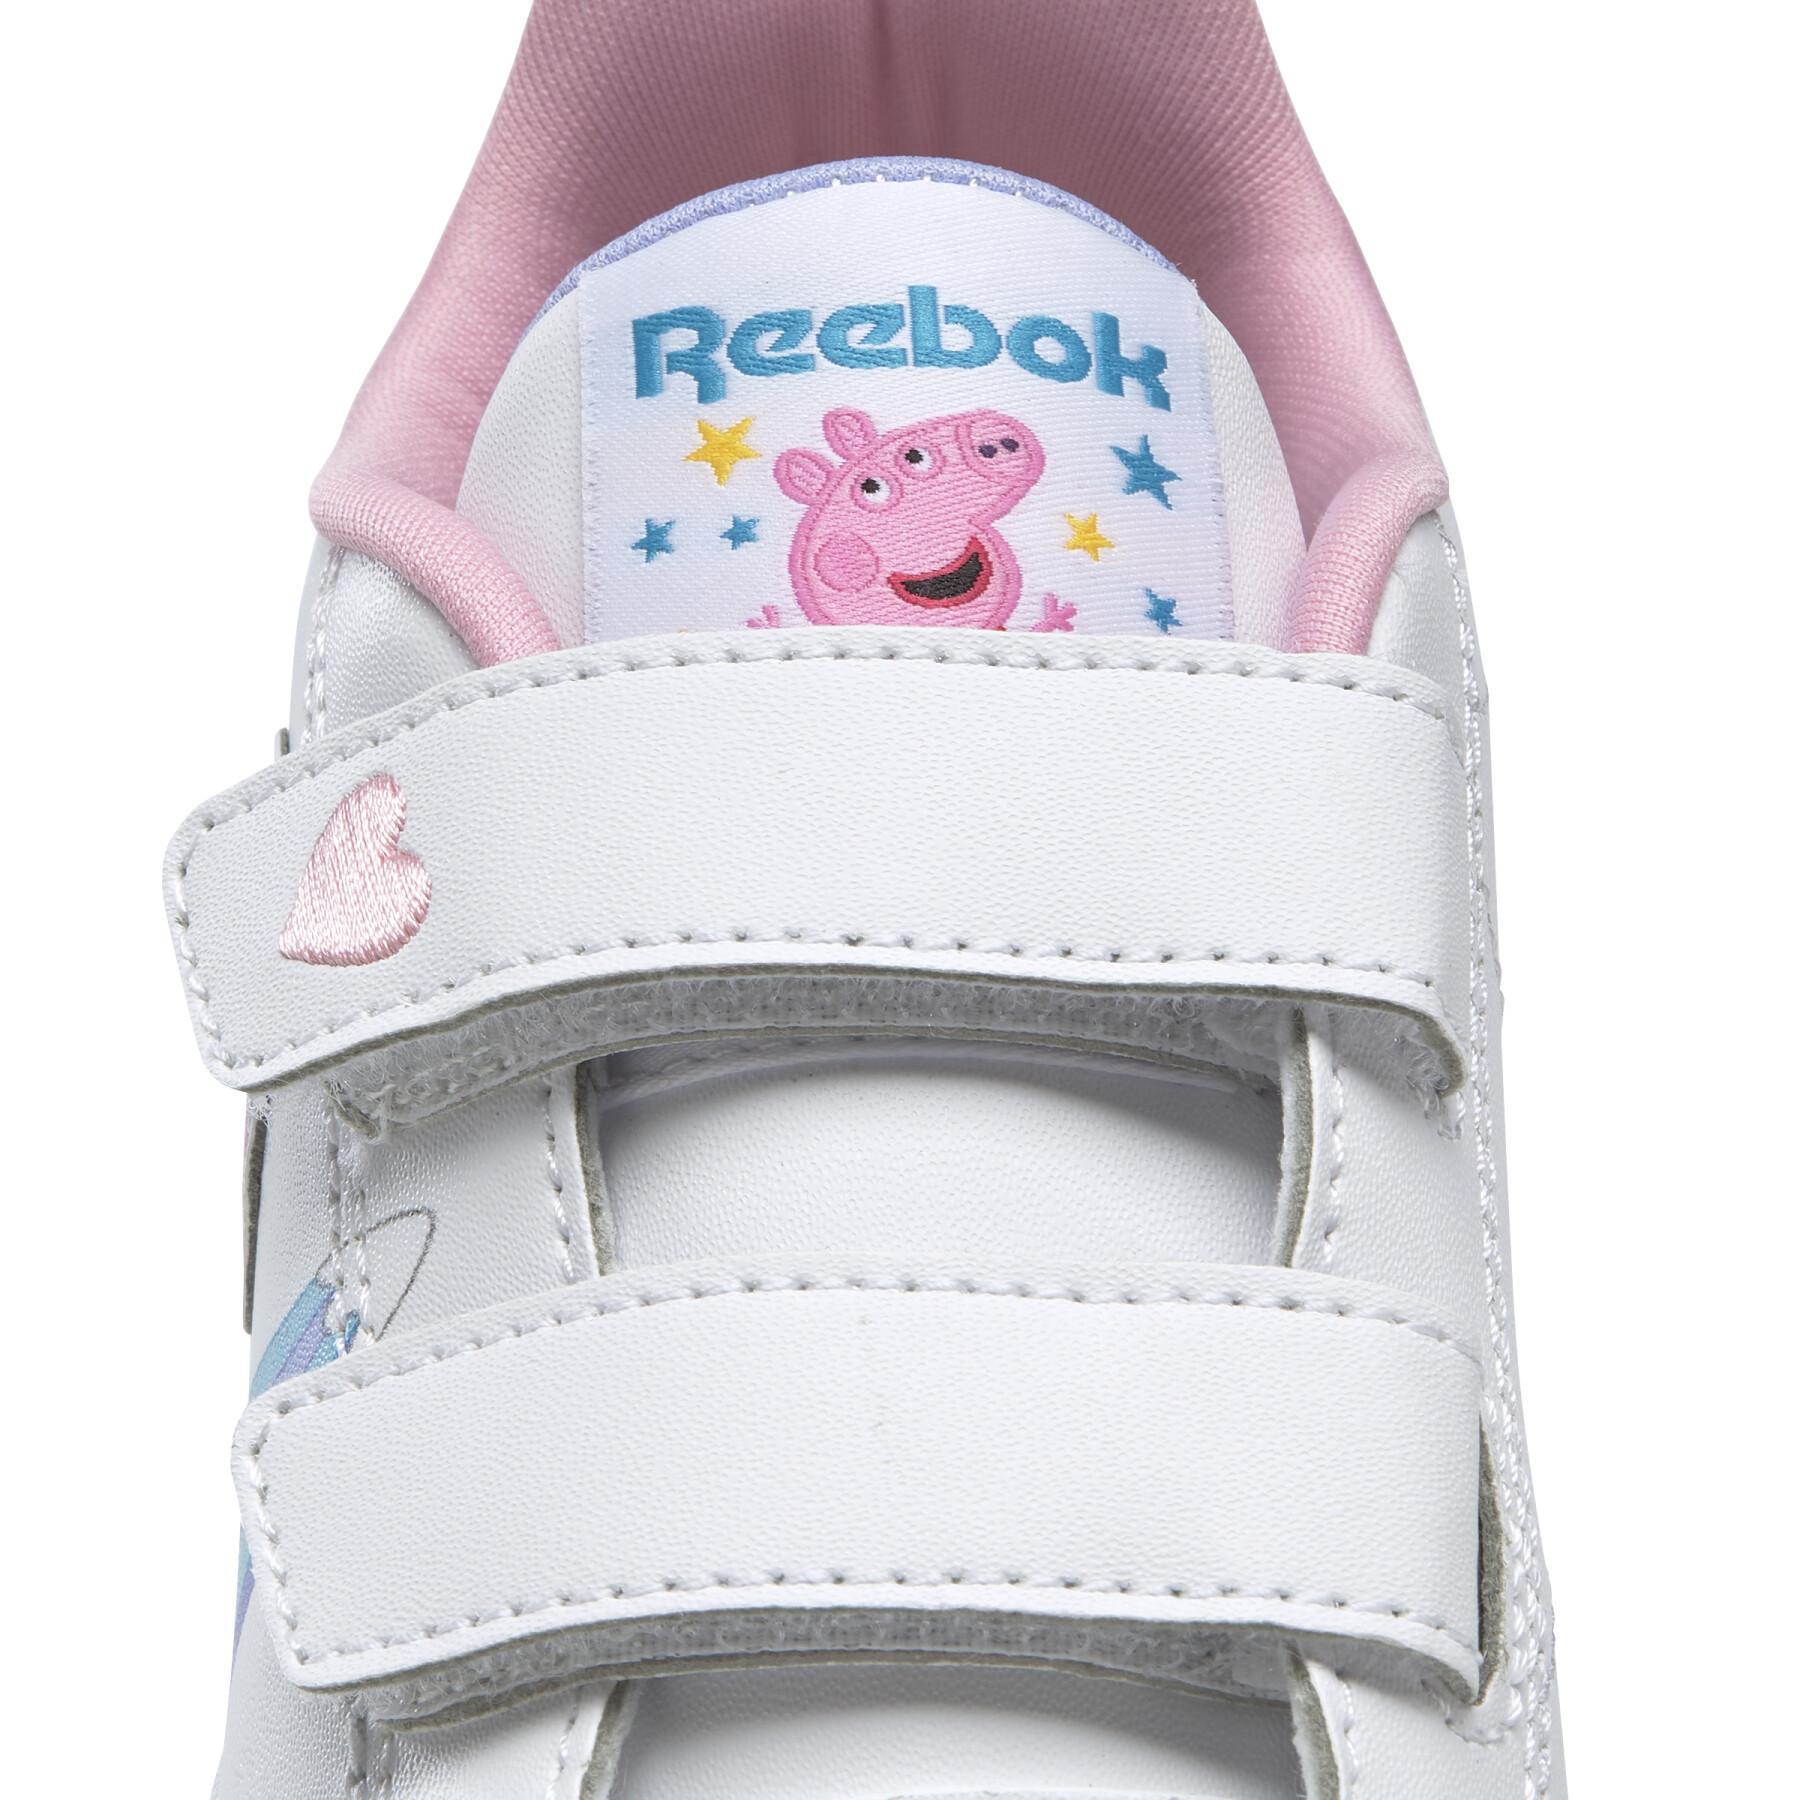 Children's tennis shoes Reebok Peppa Pig Royal Complete 2